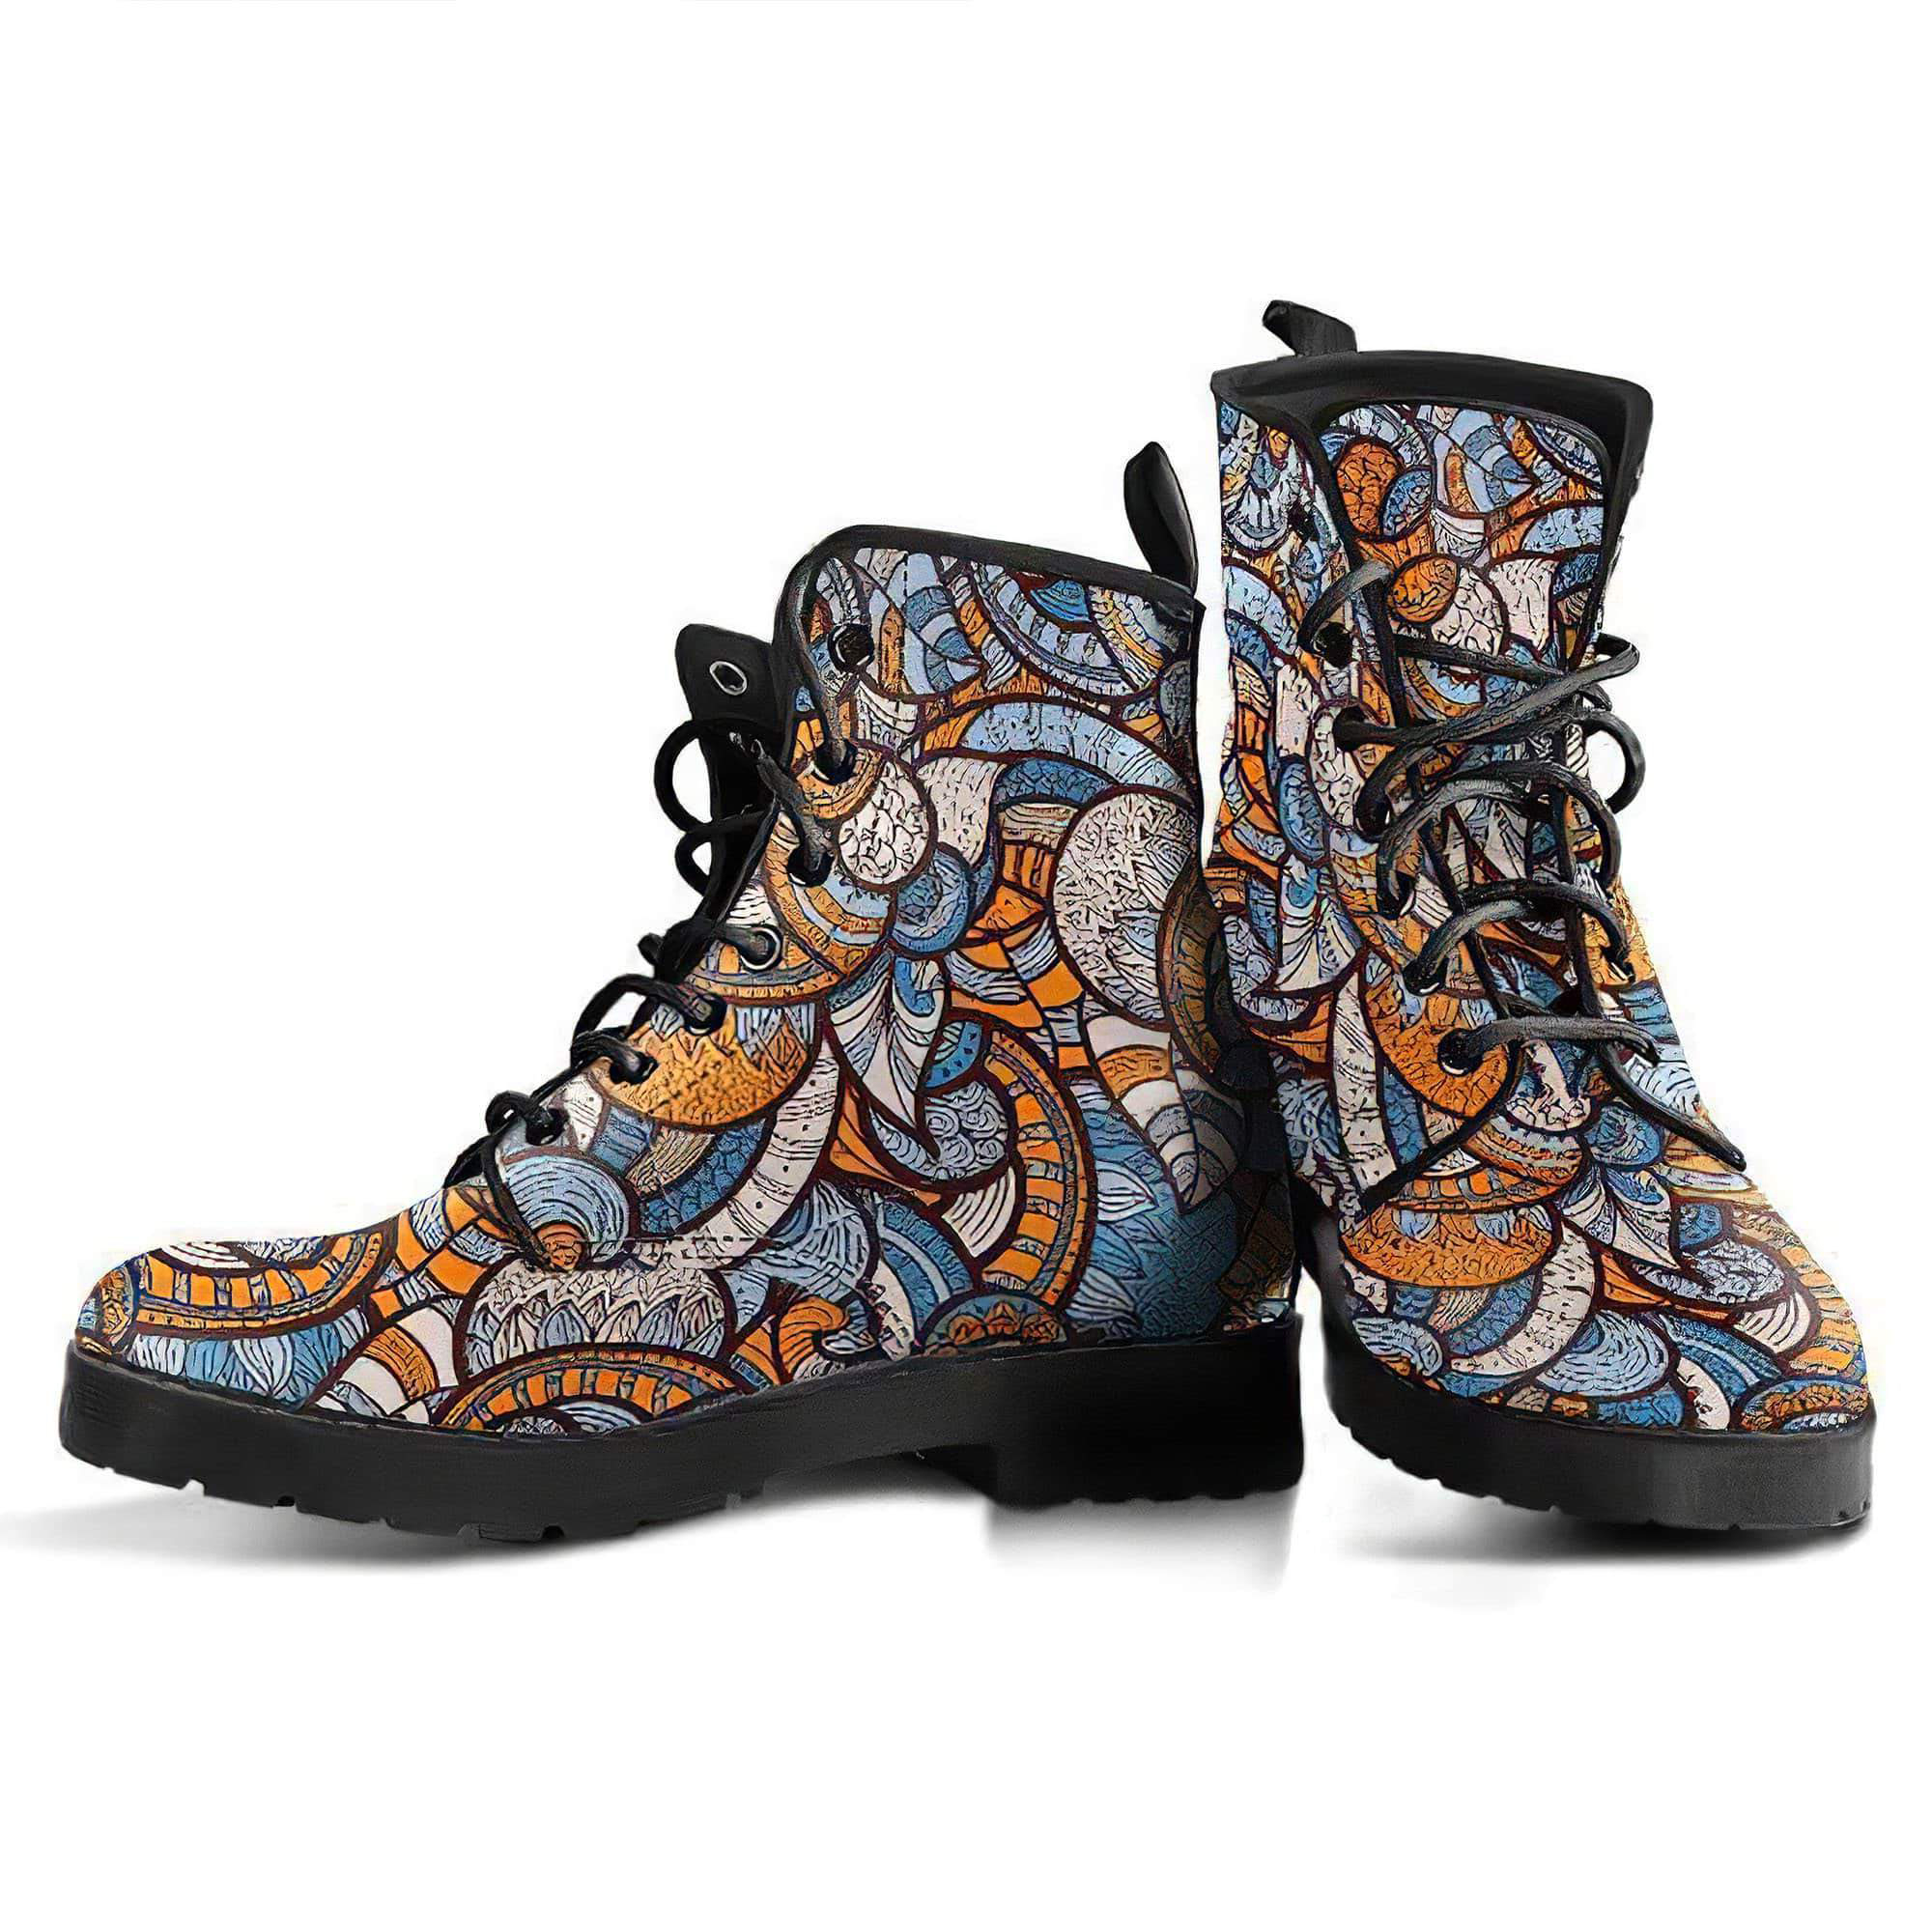 zen-4-handcrafted-boots-women-s-leather-boots-12051990413373.jpg